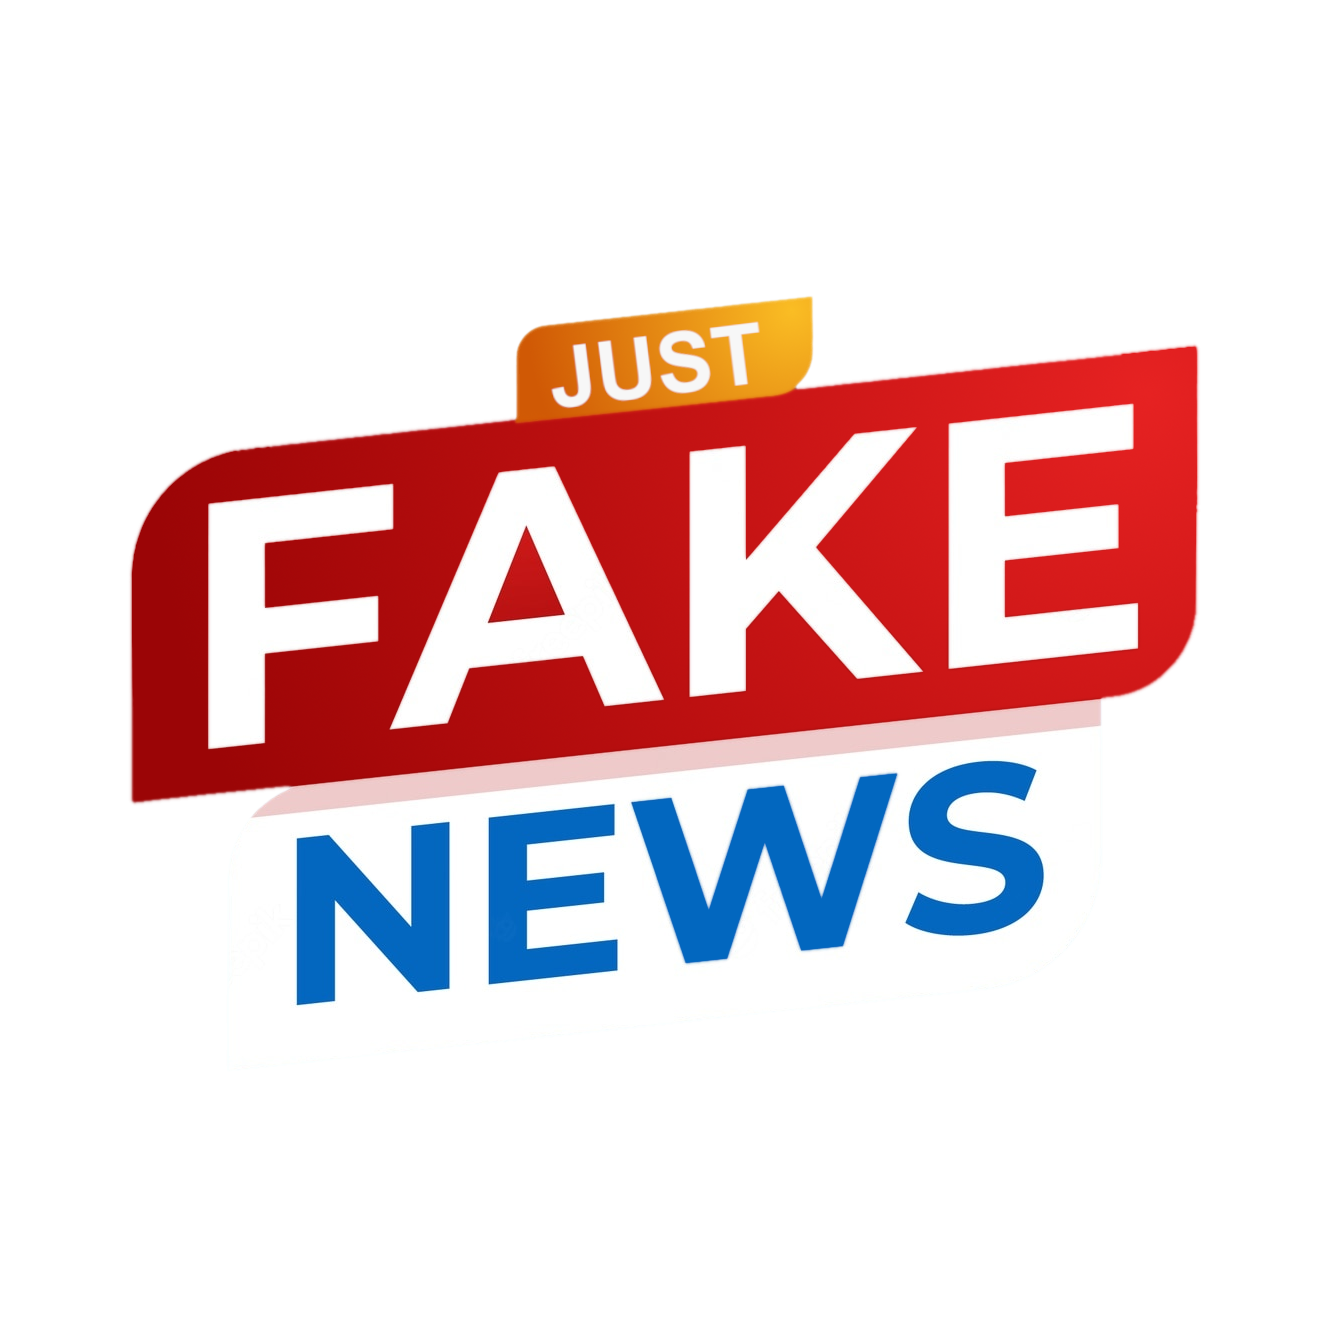 Just Fake News